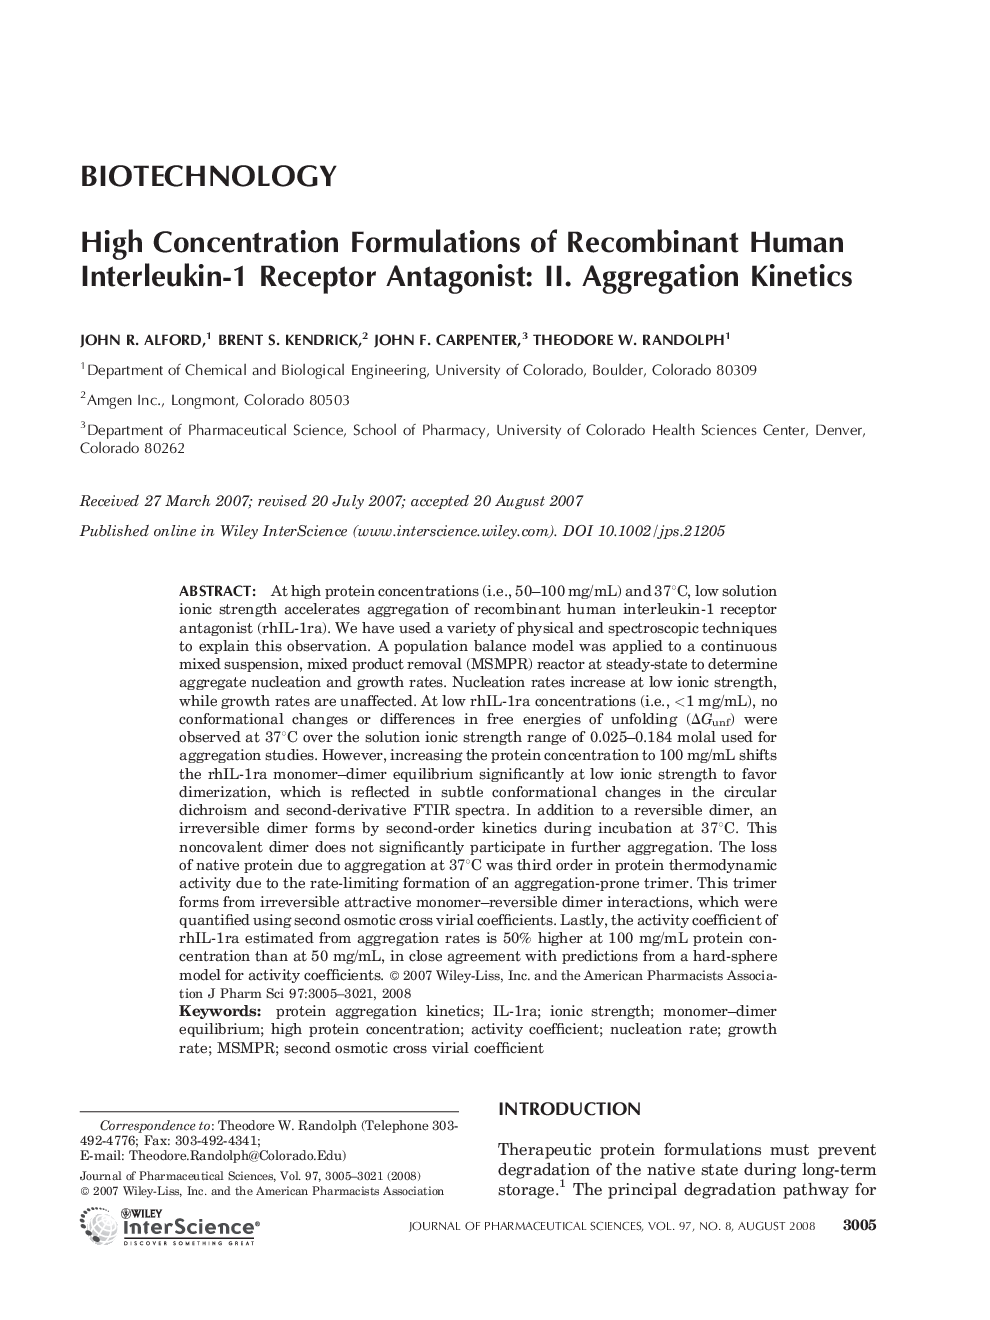 High Concentration Formulations of Recombinant Human Interleukin-1 Receptor Antagonist: II. Aggregation Kinetics